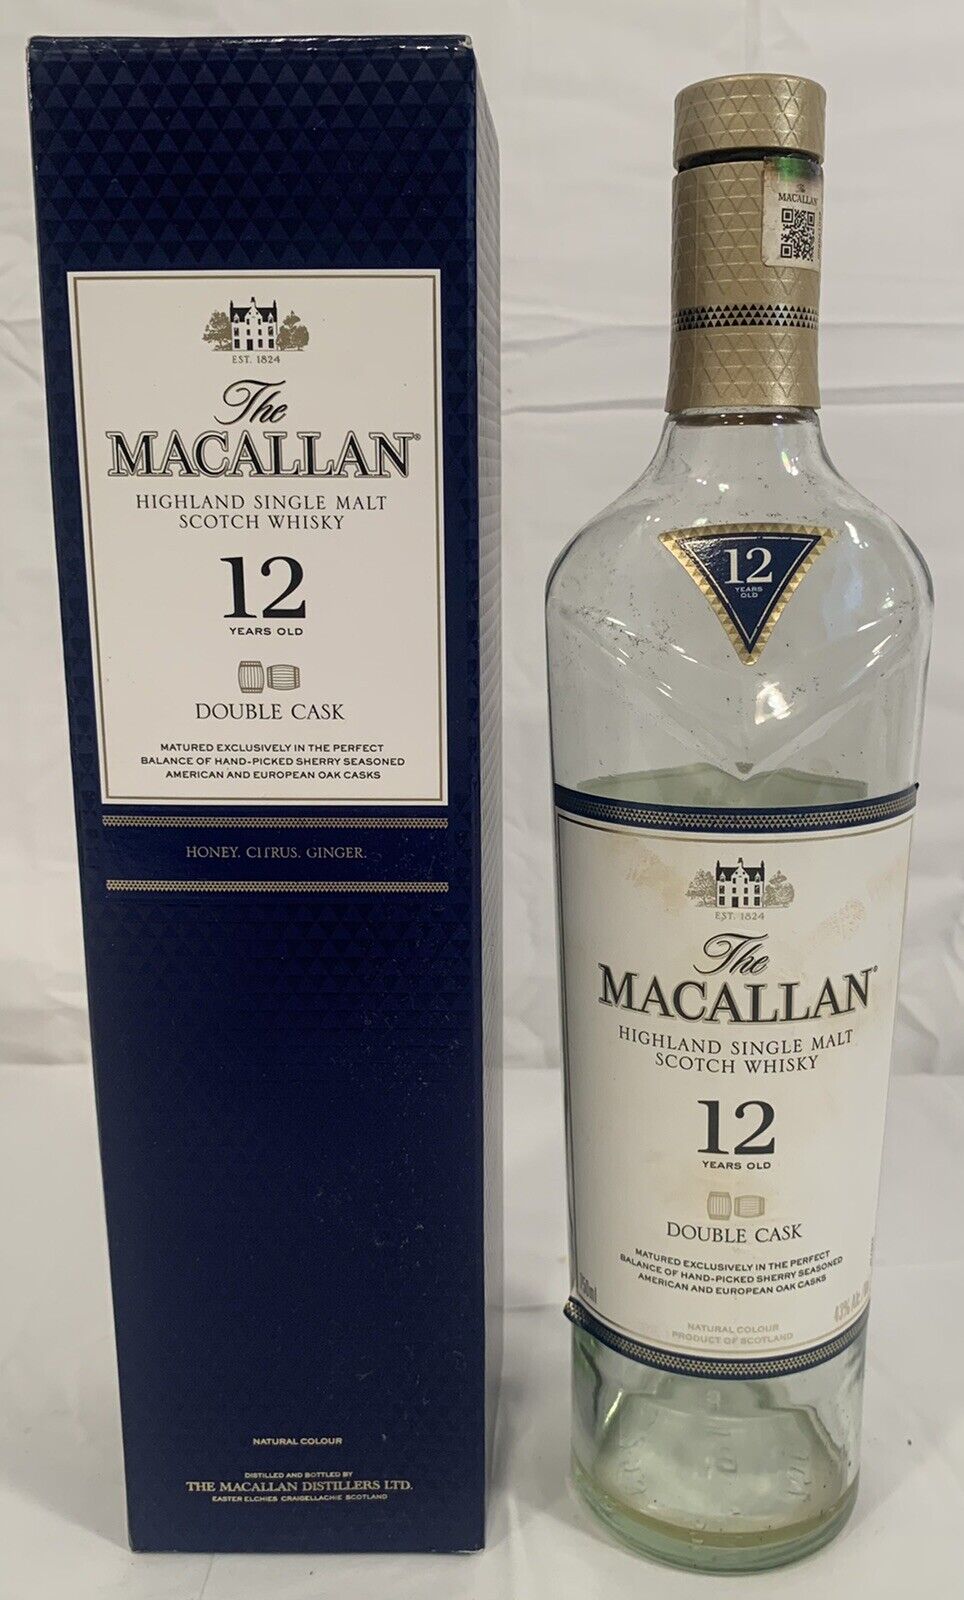 Macallan 12 Double Cask Highland Single Malt Scotch Whisky bottle w/box